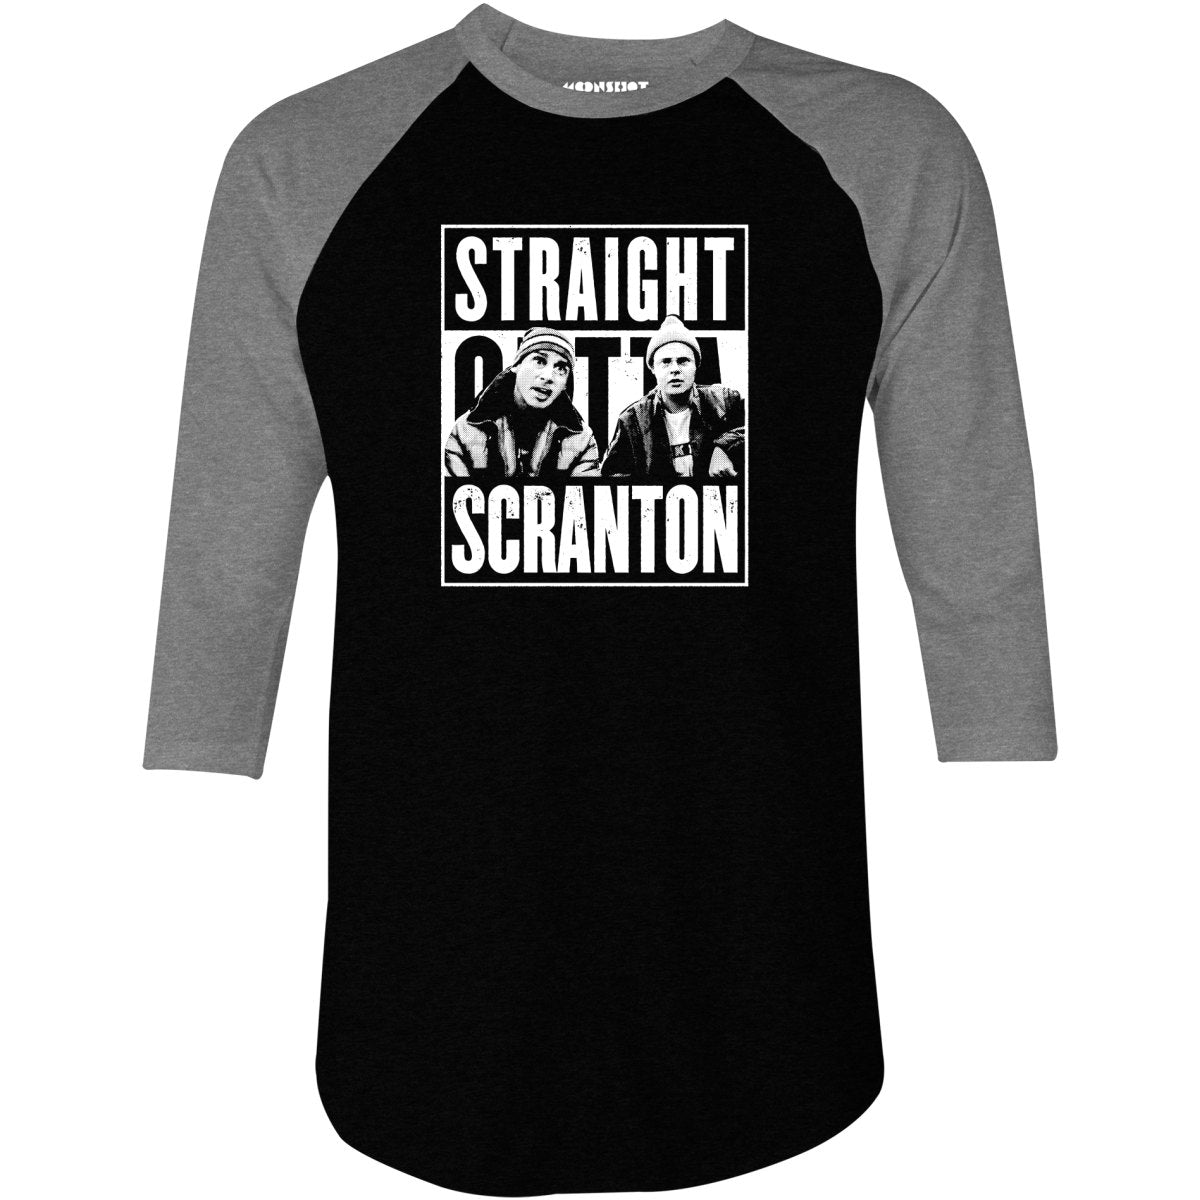 Straight Outta Scranton - Lazy Scranton - 3/4 Sleeve Raglan T-Shirt